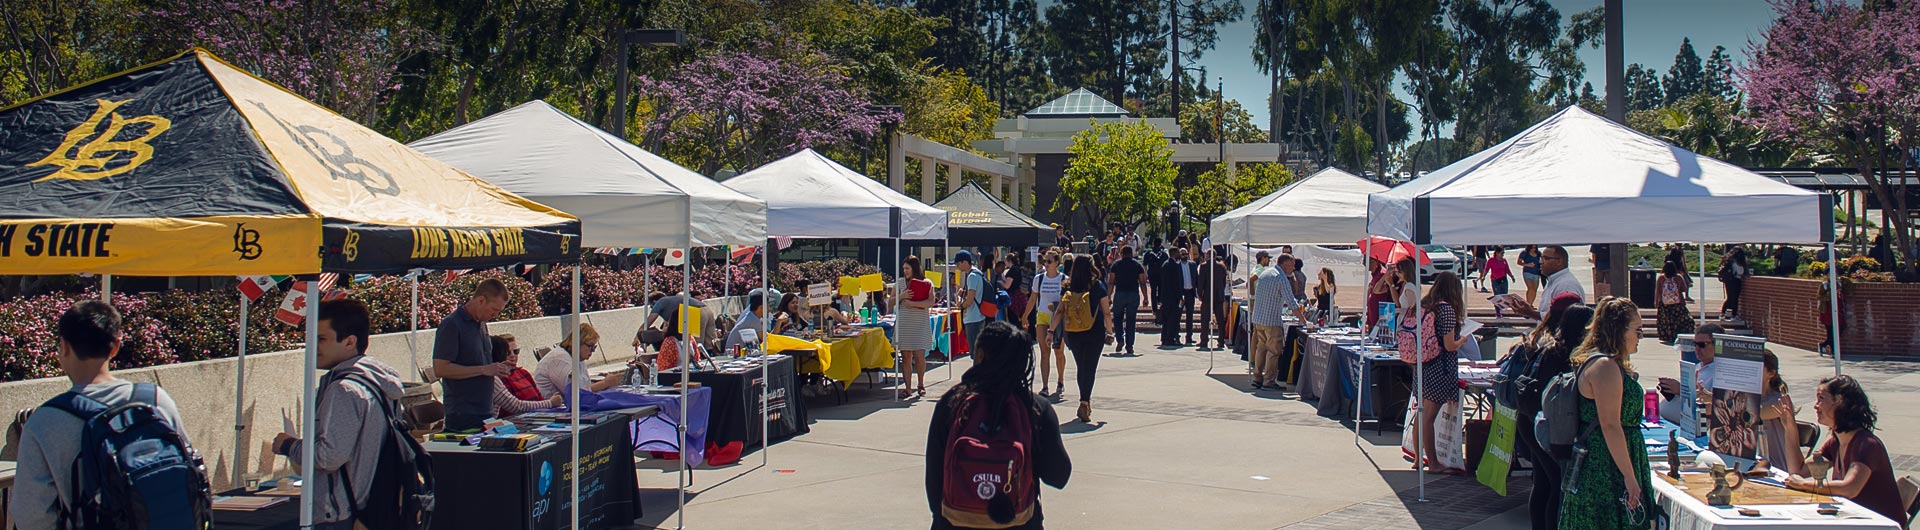 Students visiting campus fair